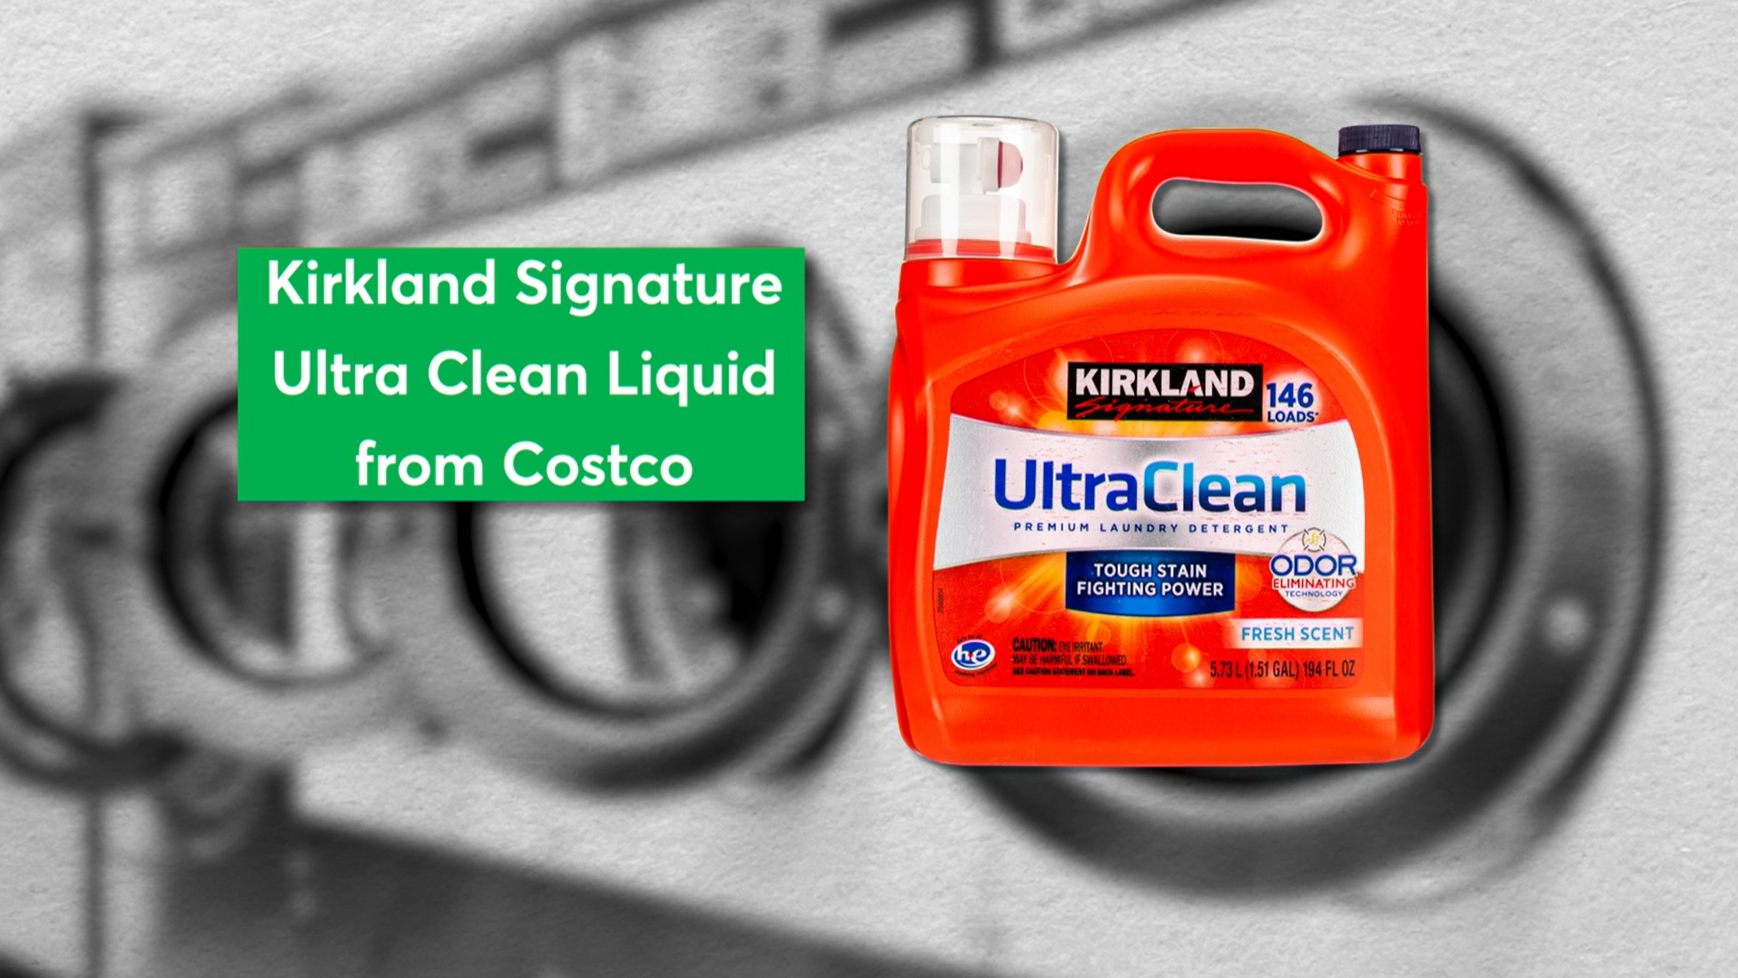 Kirkland Signature laundry detergent